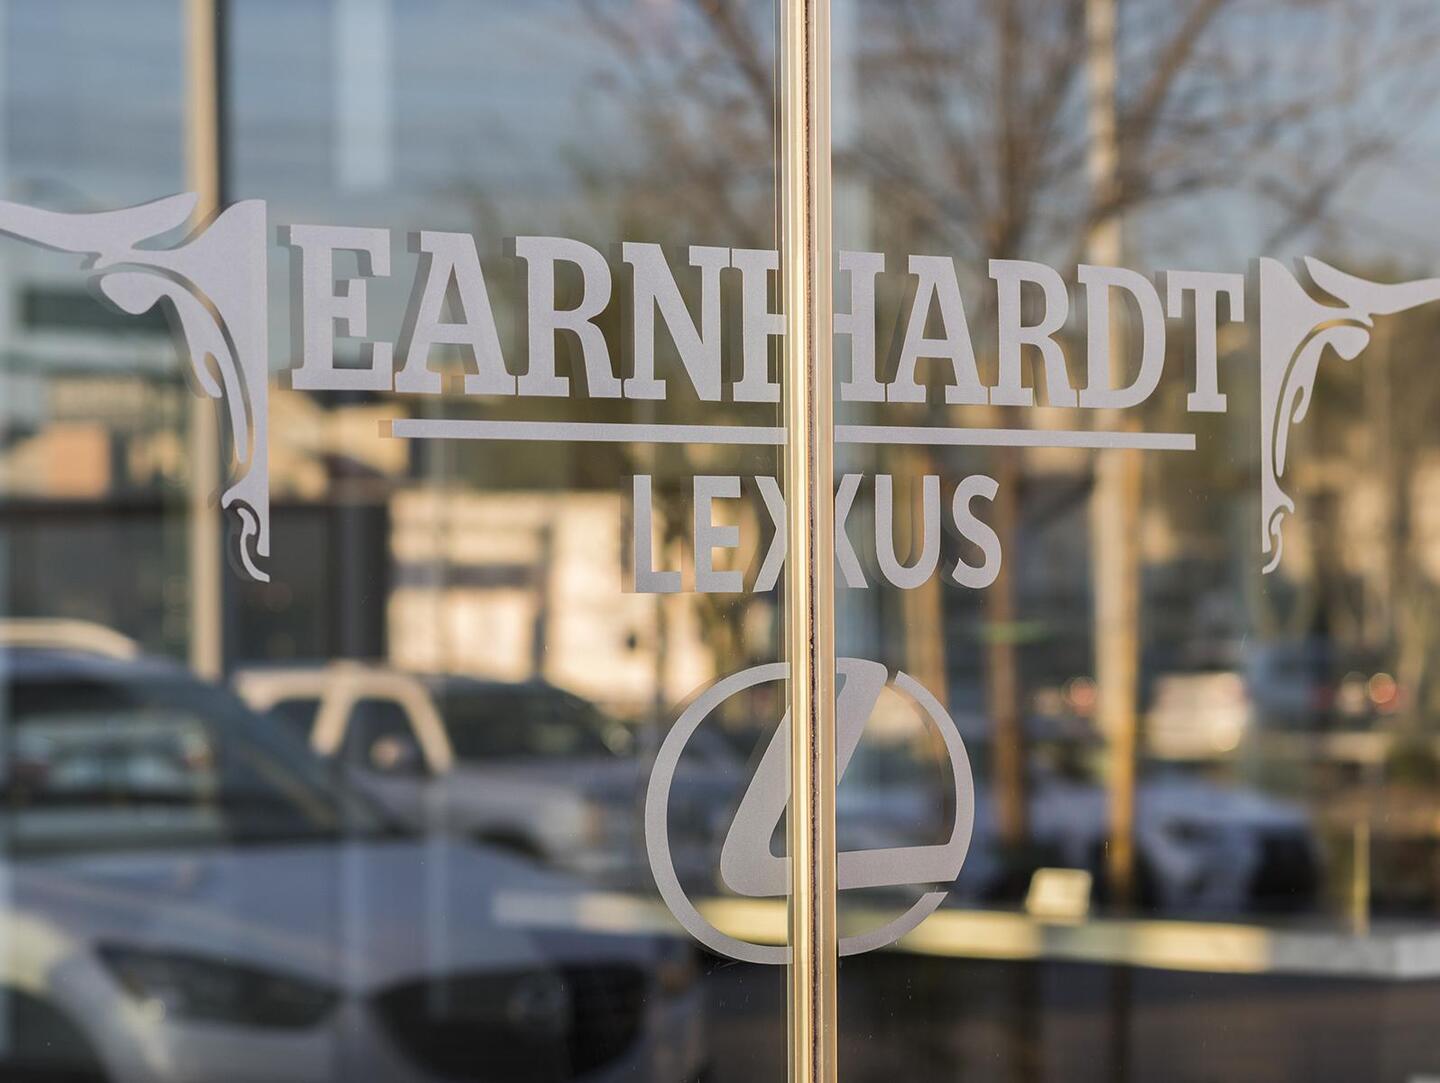 Earnhardt Lexus in Phoenix AZ